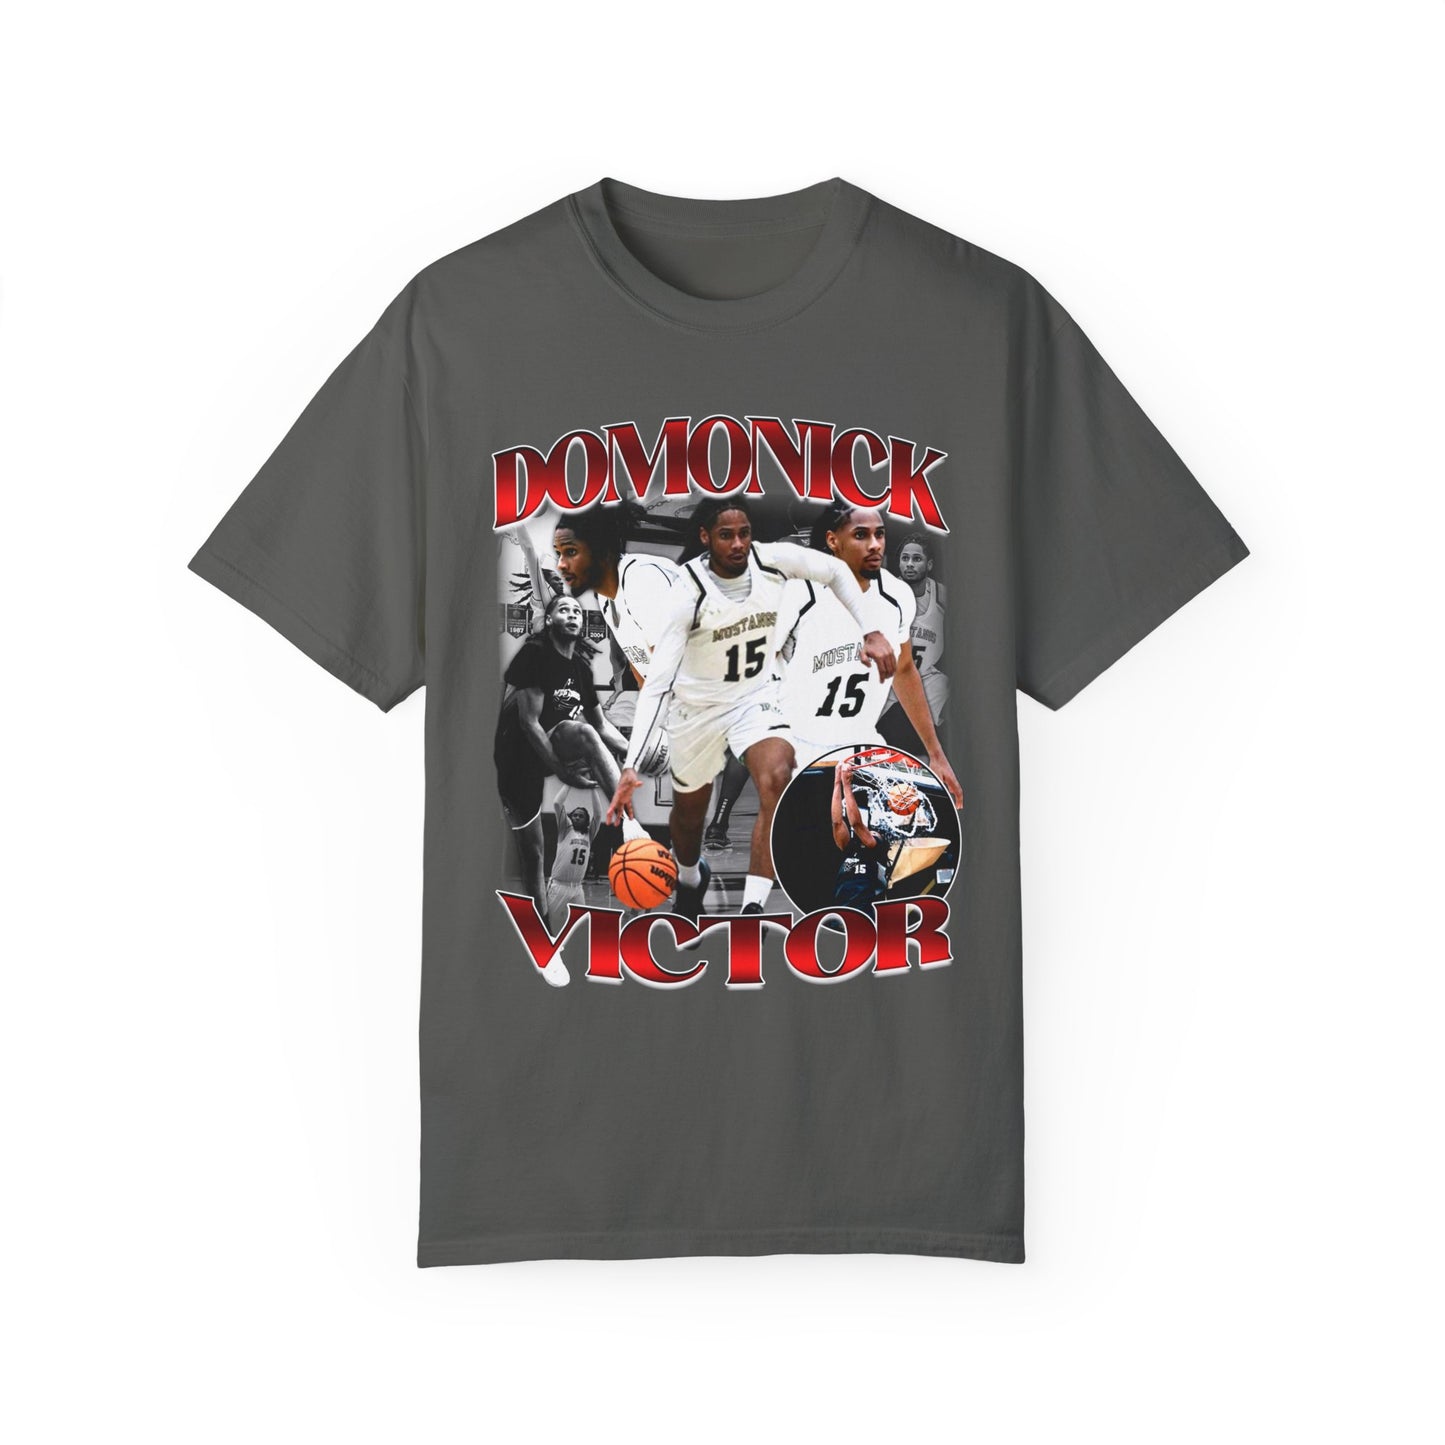 Domonick Victor Graphic T-shirt